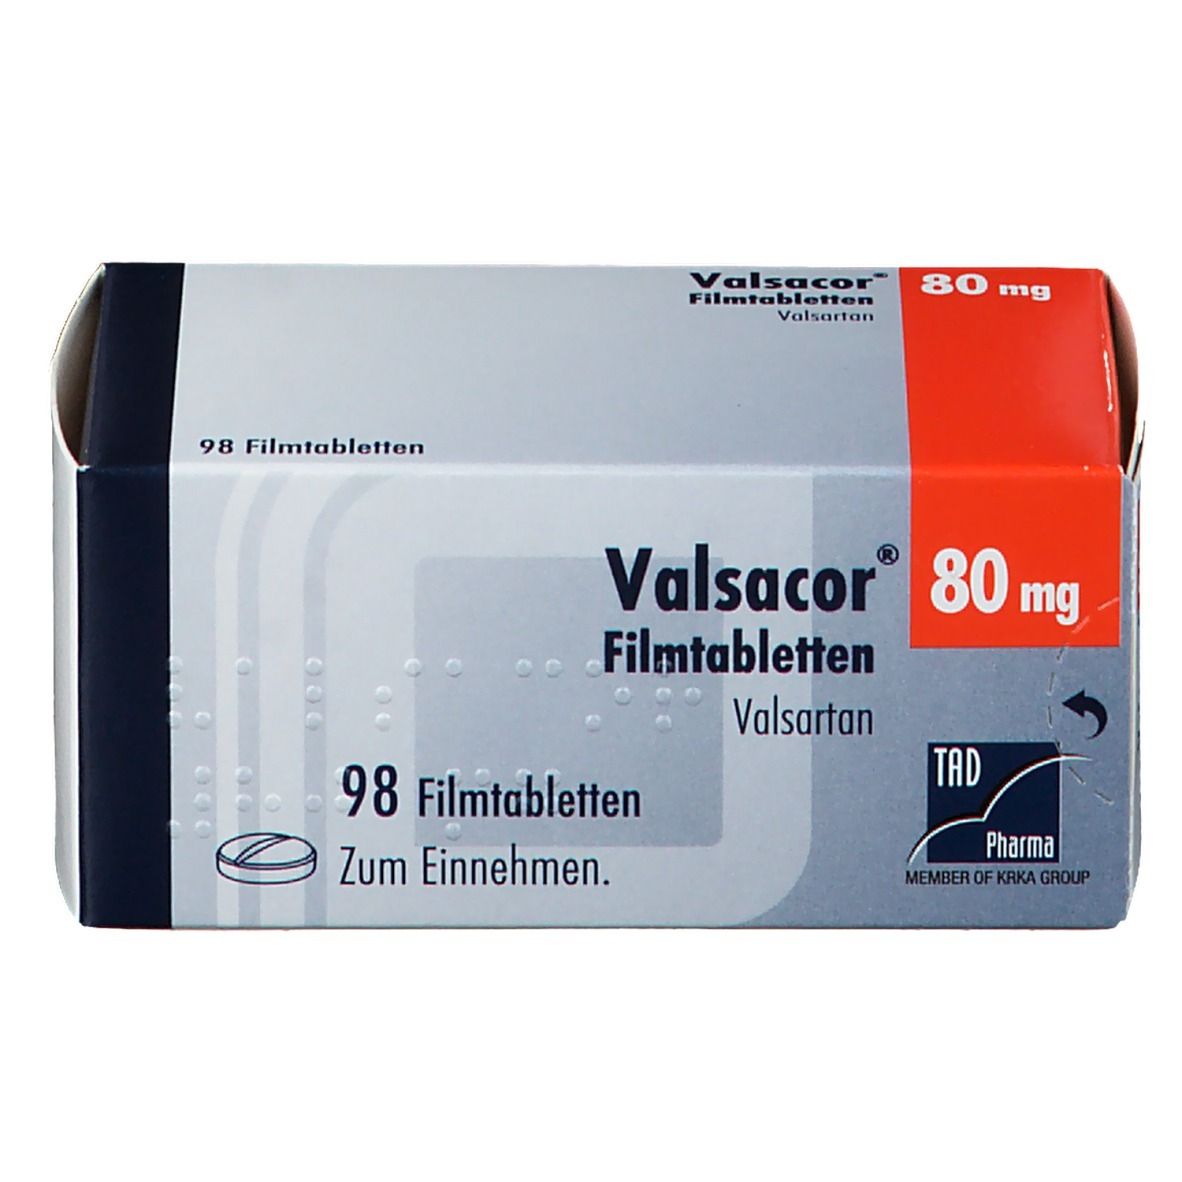 Valsacor® 80 mg